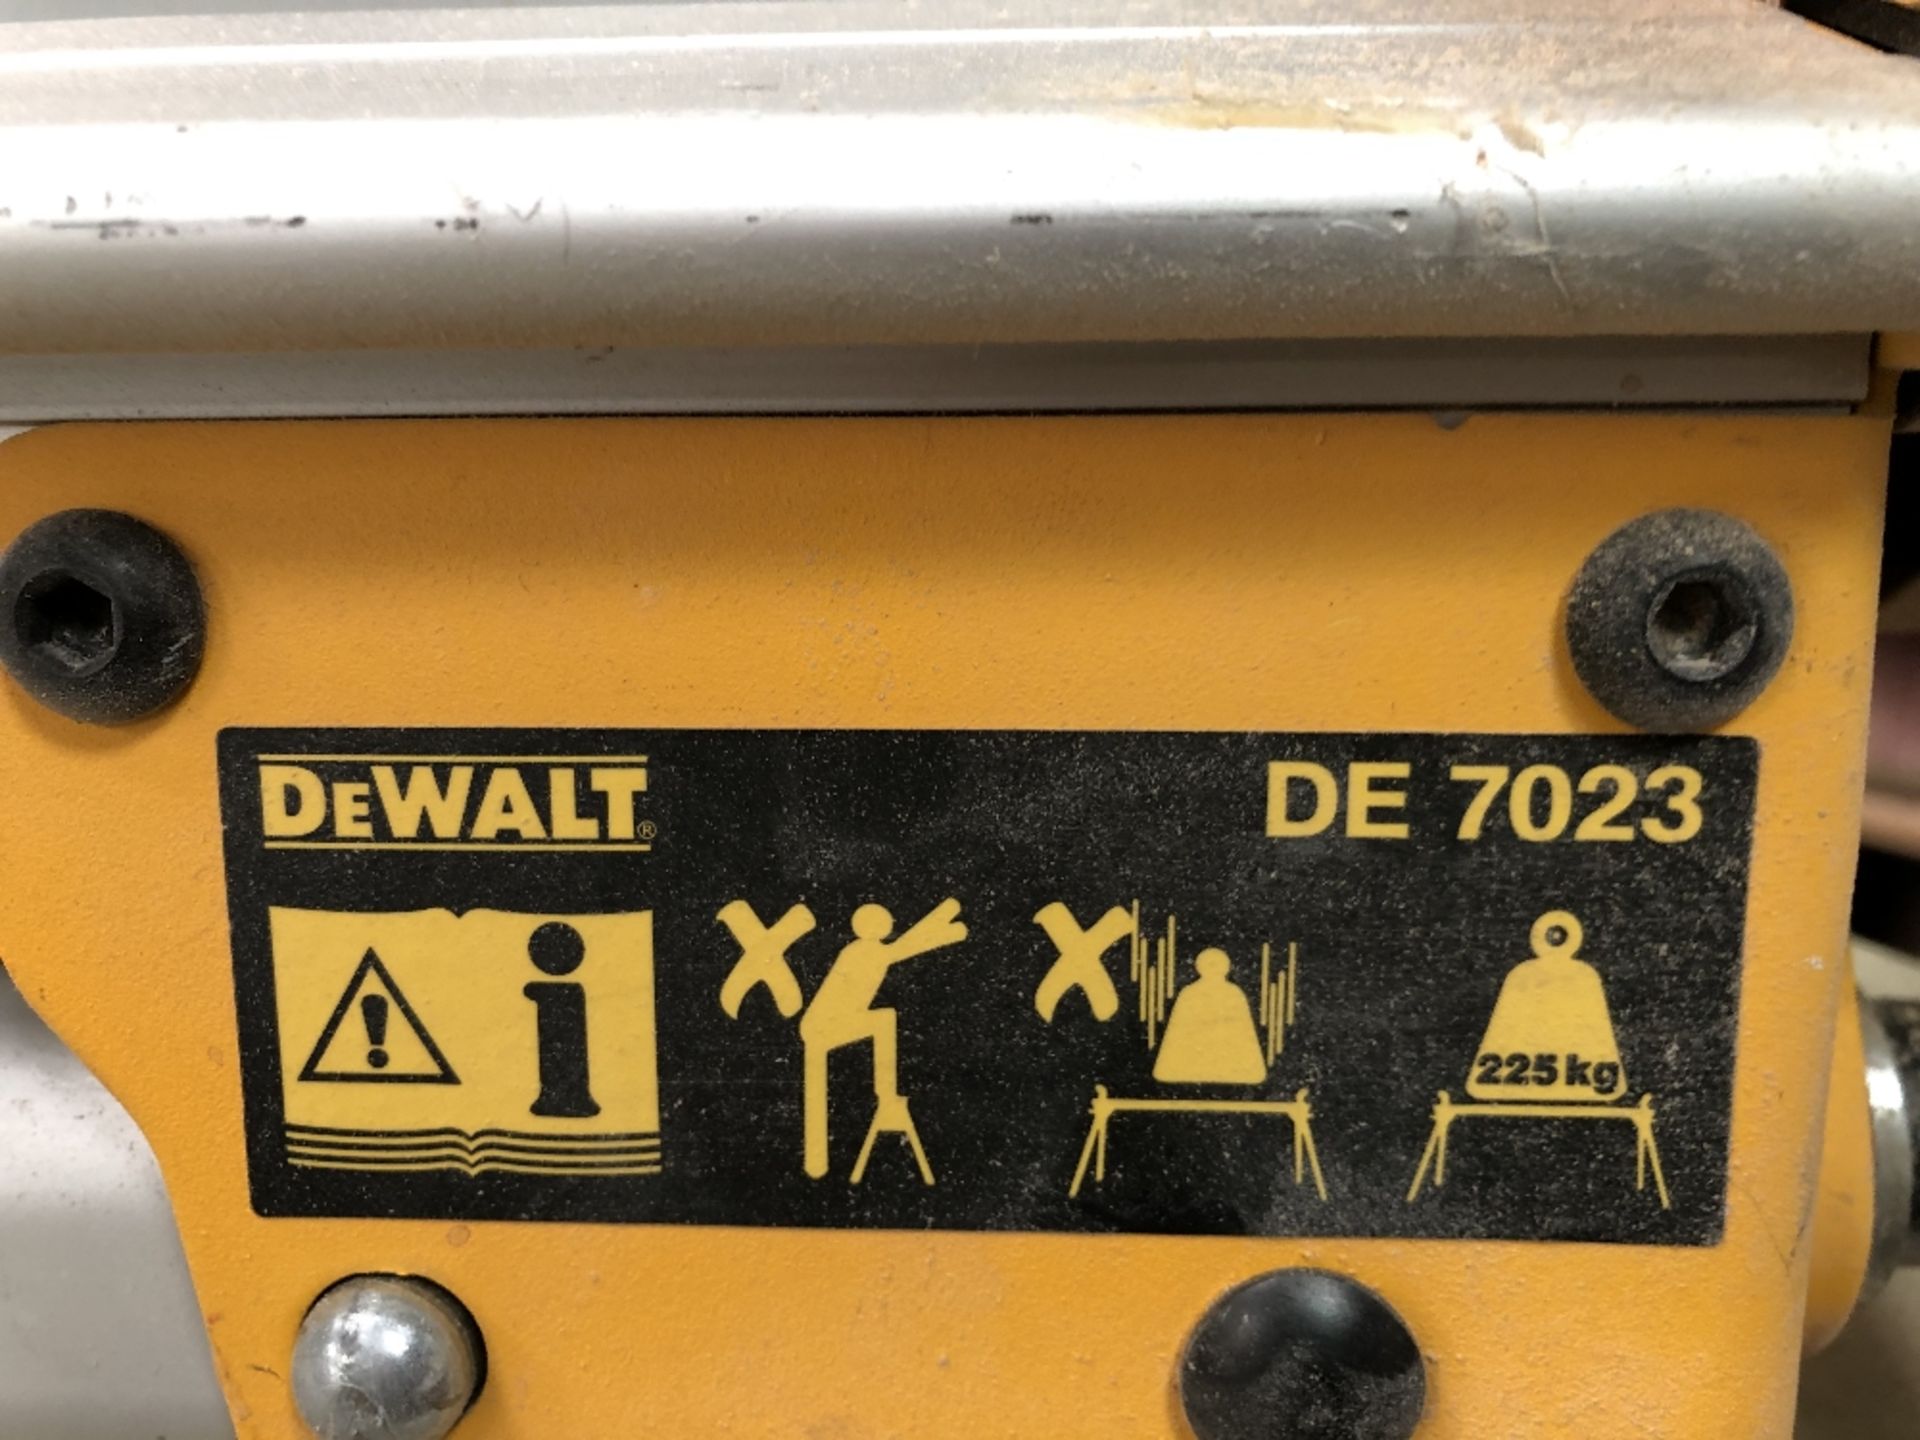 DeWalt DE7023 Heavy Duty Mitre Saw Workstation - Image 3 of 4